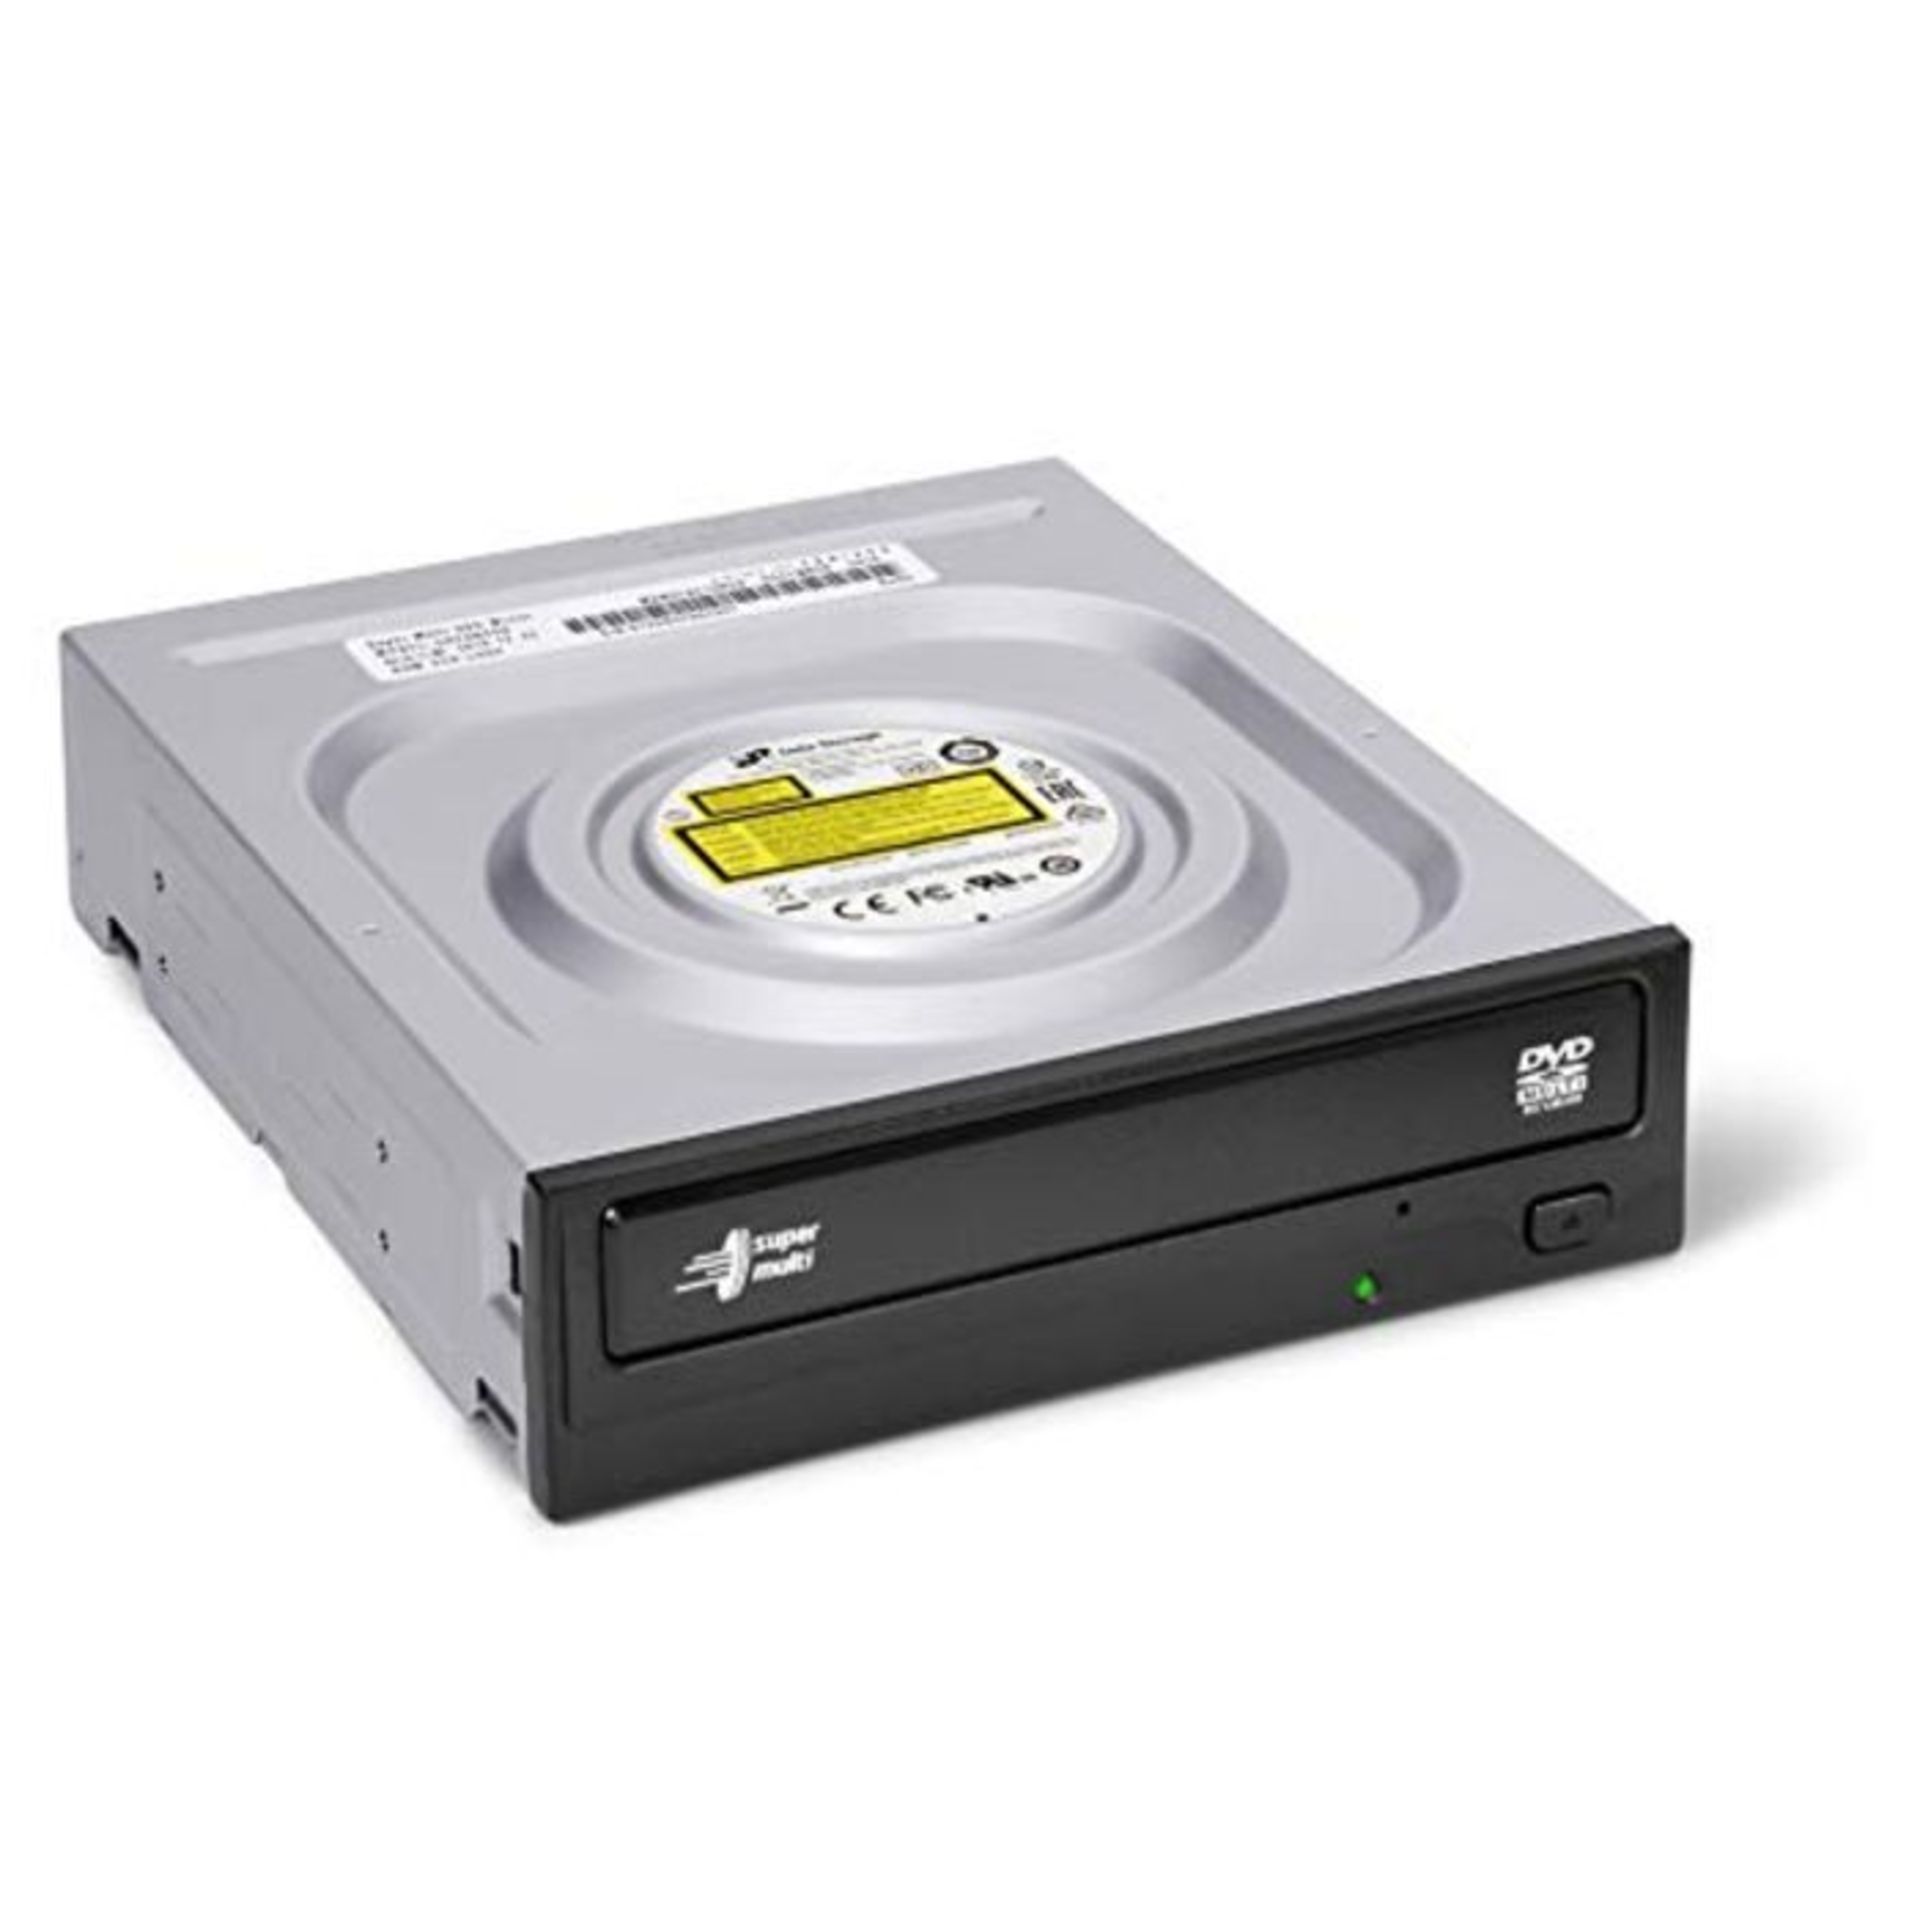 Hitachi-LG GH24 Internal DVD Drive, DVD-RW CD-RW ROM Rewriter for Laptop/Desktop PC, W